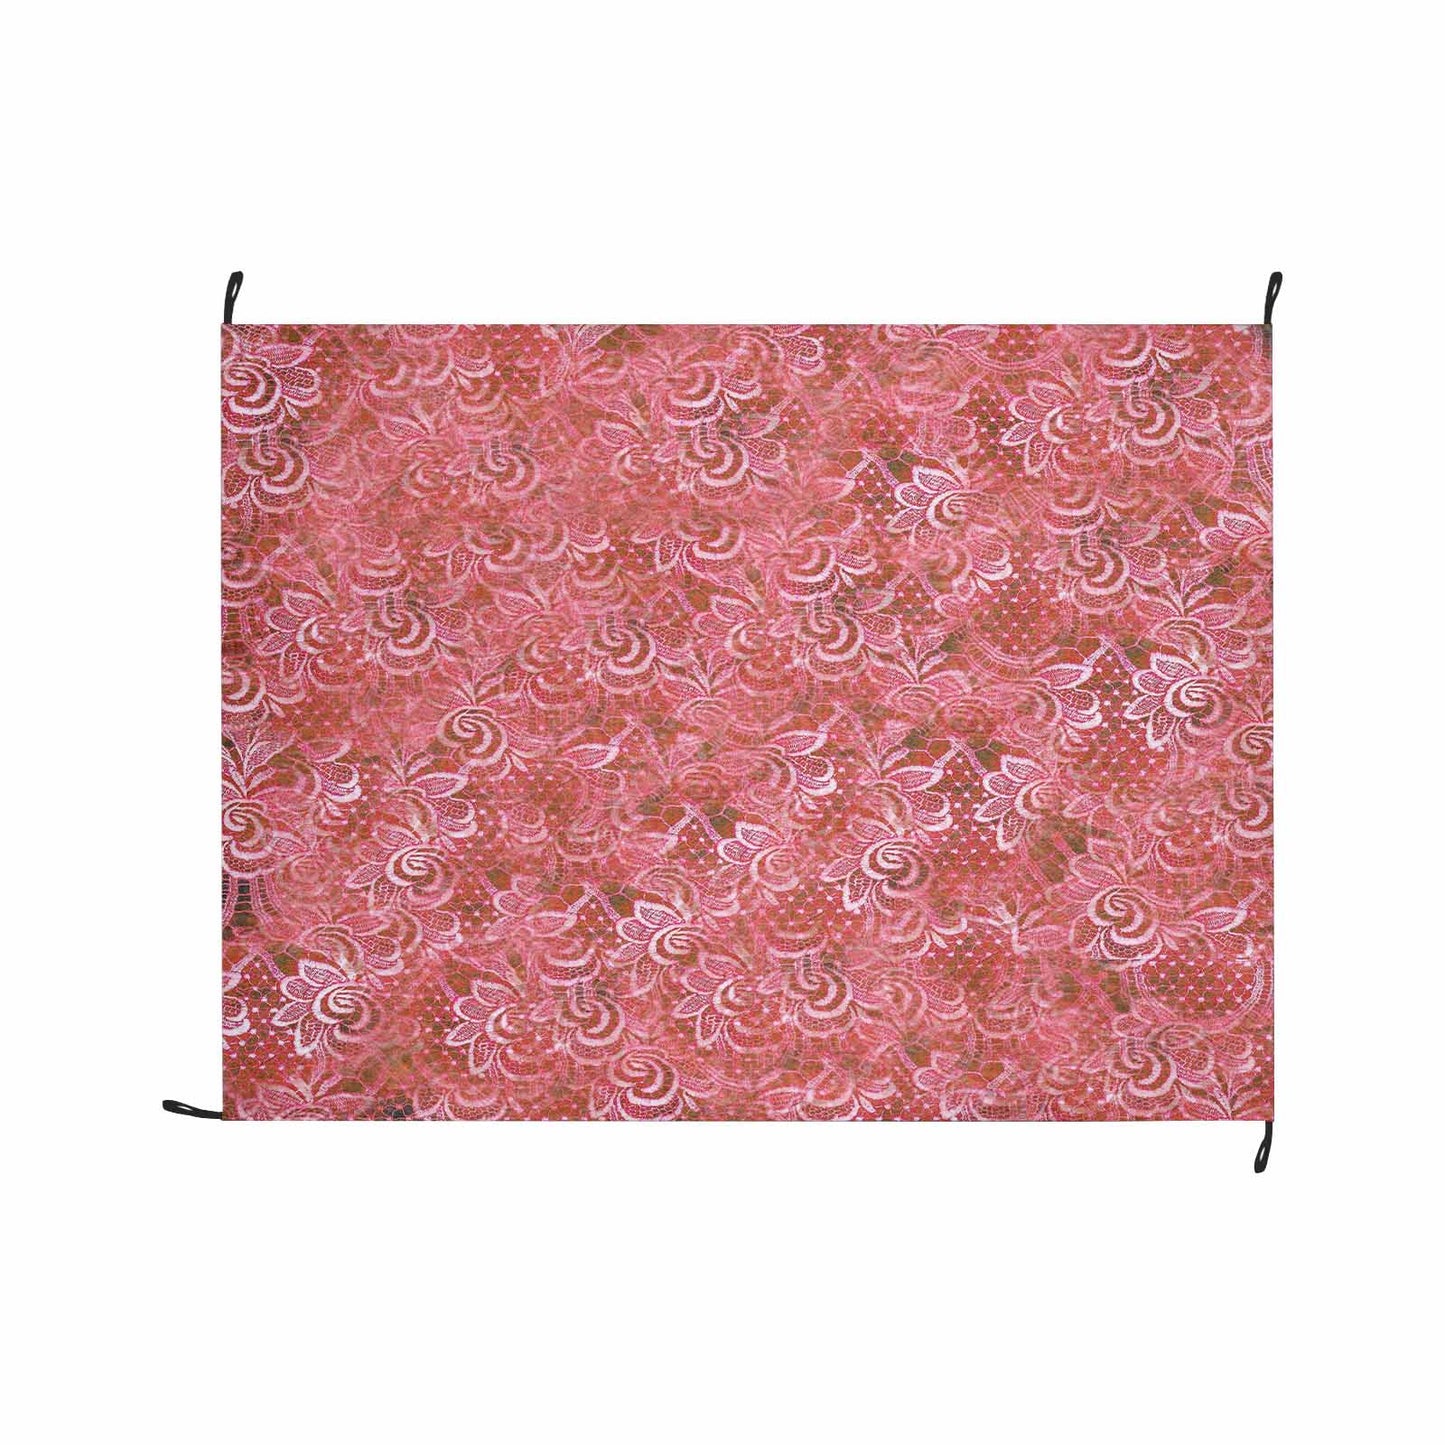 Victorian lace print waterproof picnic mat, 69 x 55in, design 33